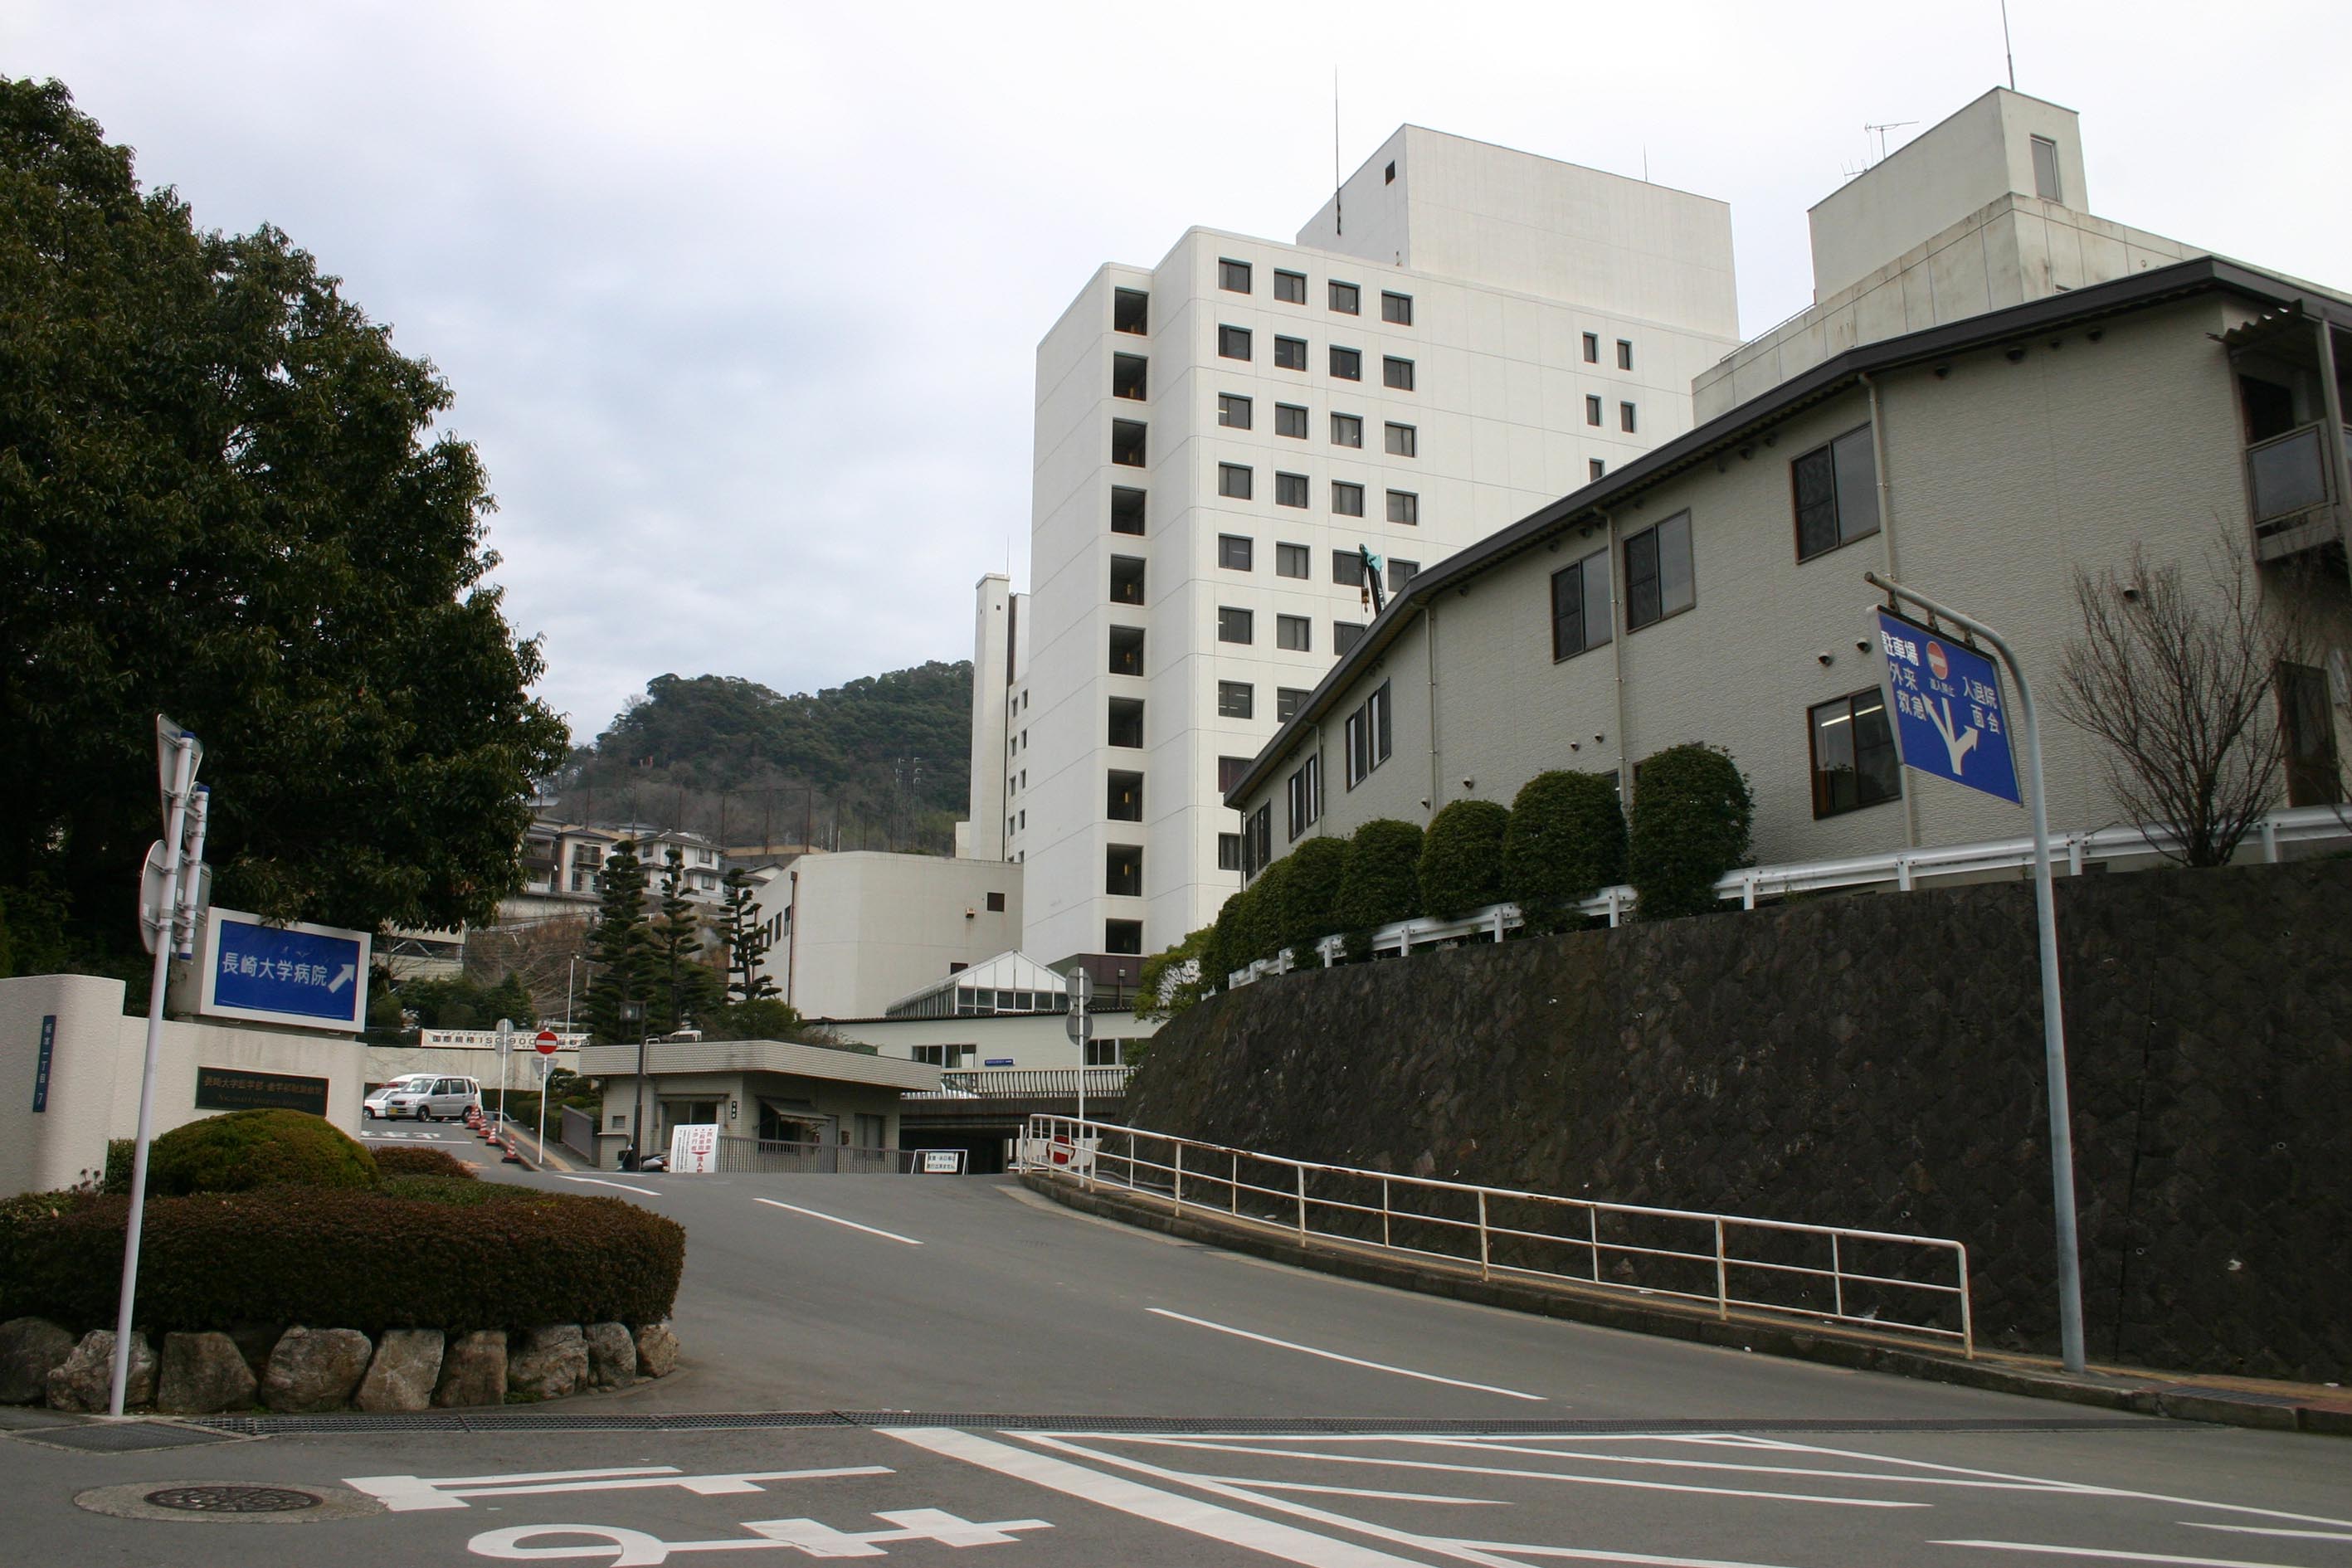 Hospital. 1268m to Nagasaki University Hospital (Hospital)